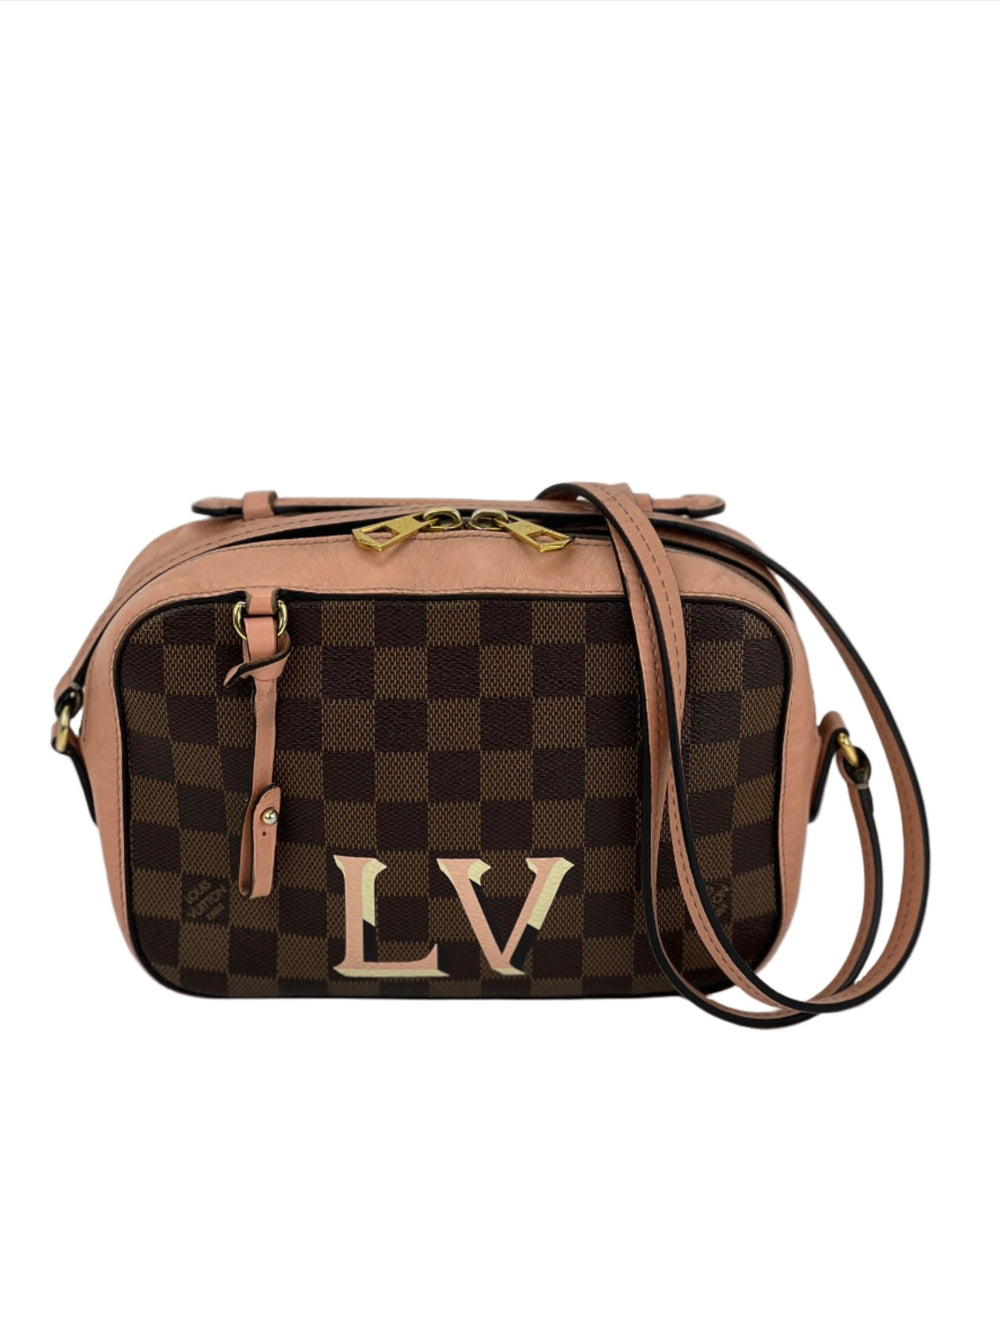 Louis Vuitton Santa Monica Damier Ebene Pink Leather Bag N40179 Preowned